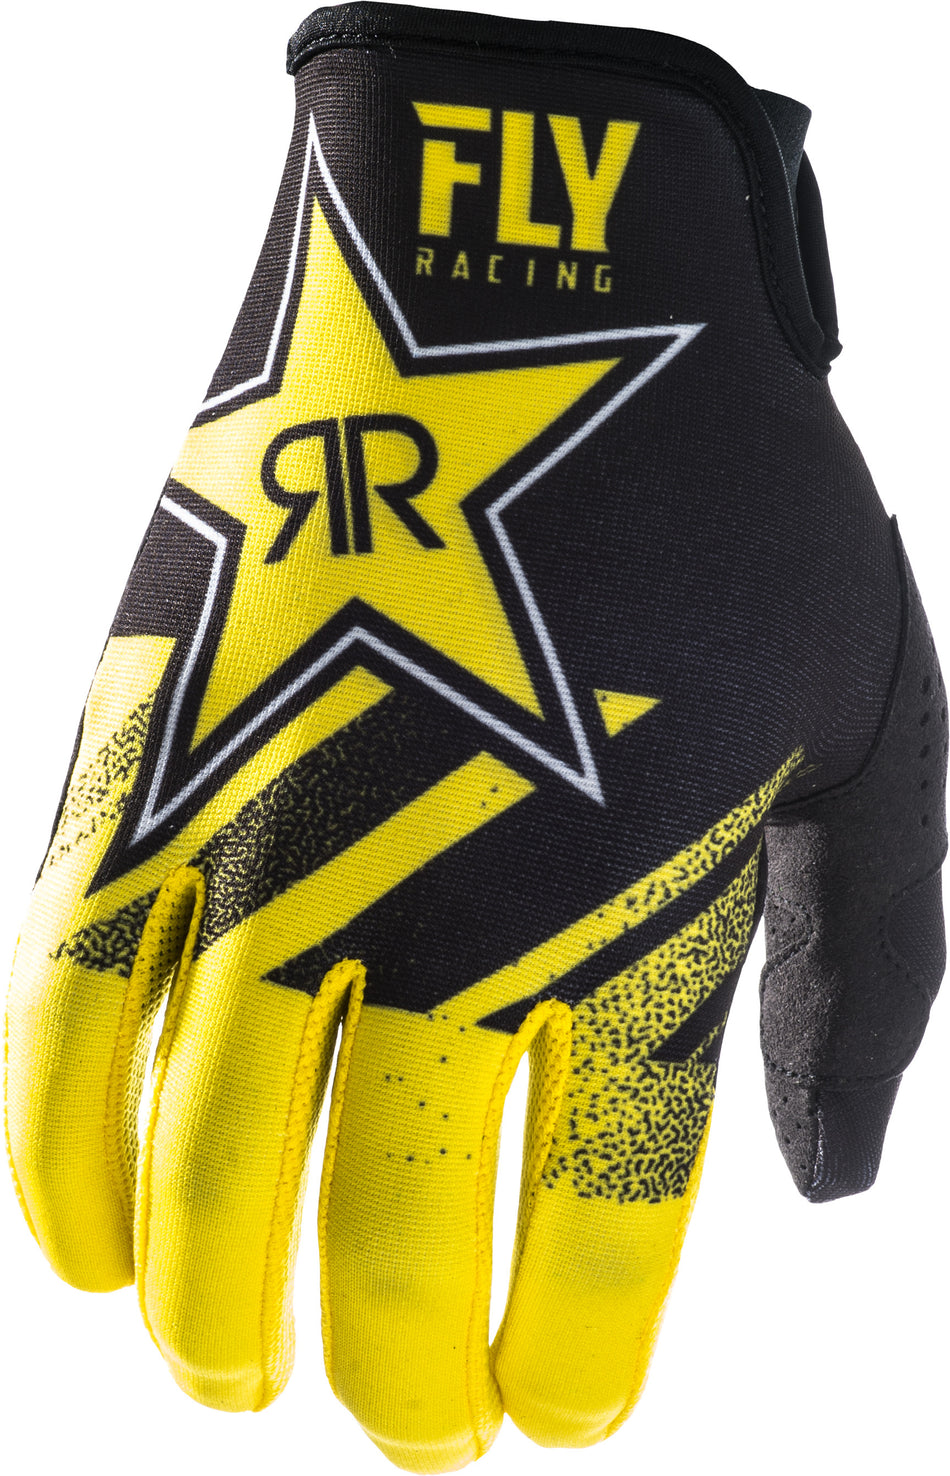 FLY RACING Lite Hydrogen Rockstar Gloves Yellow/Black Sz 07 372-01807